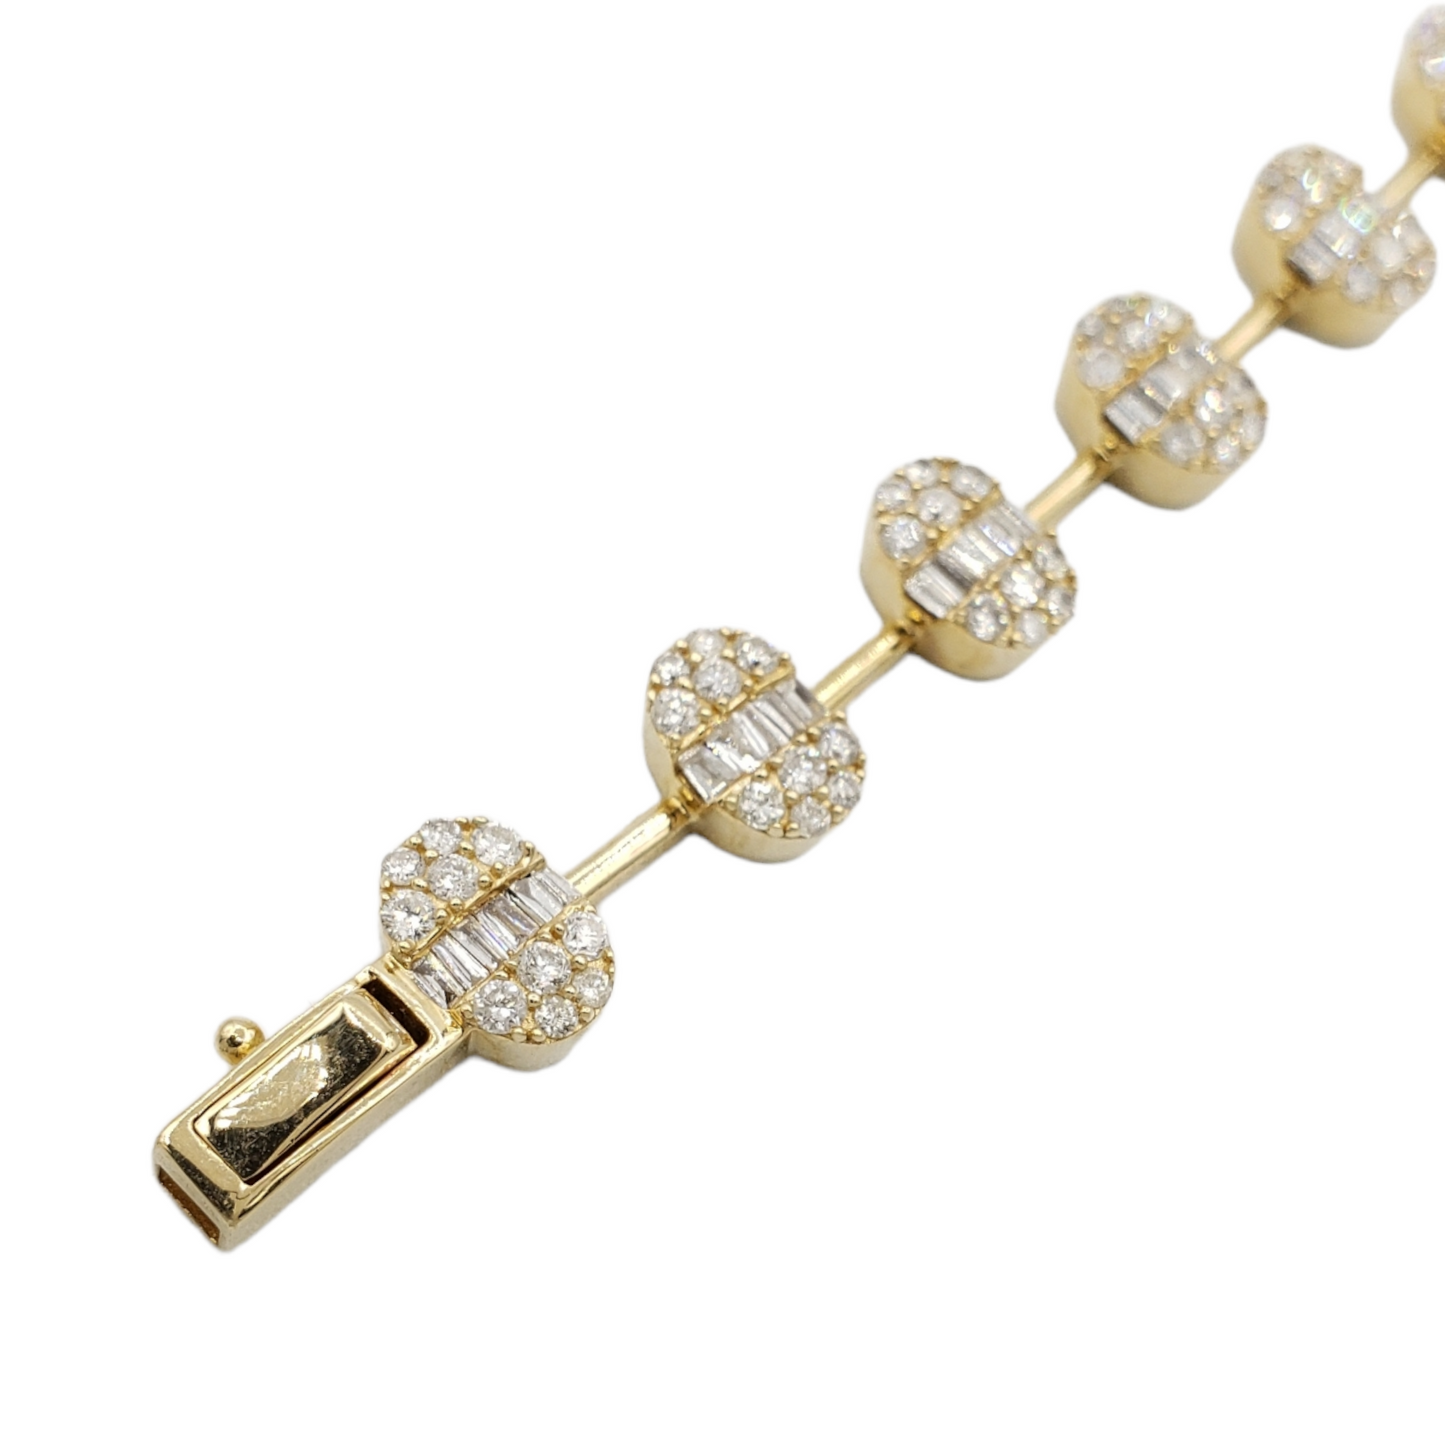 14k Oval Baguette Diamond Bracelet #25740